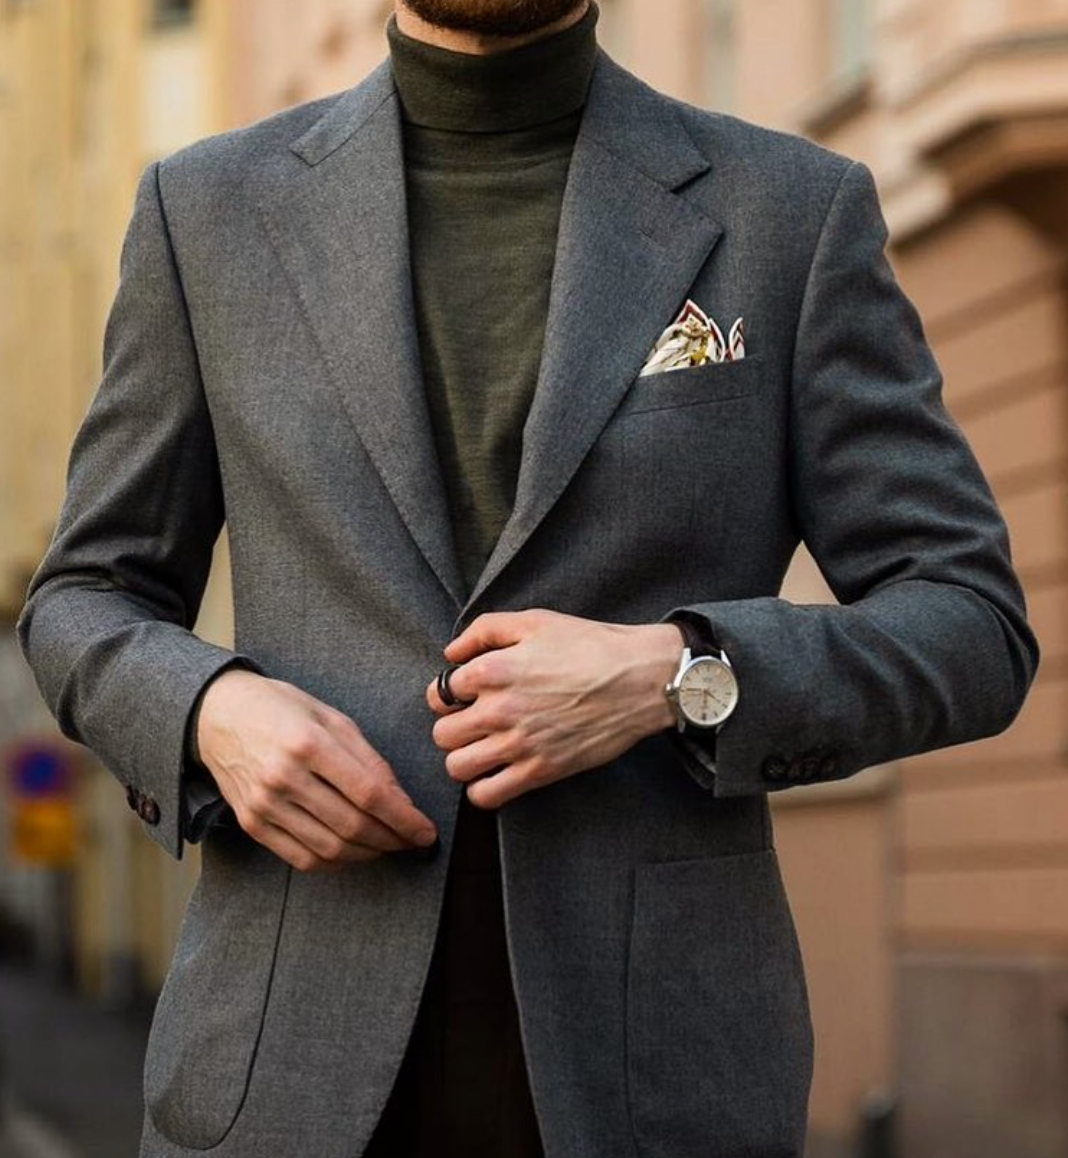 JYDress Men's Slim Fit Herringbone Tweed Suits Vest 3 Button Vest